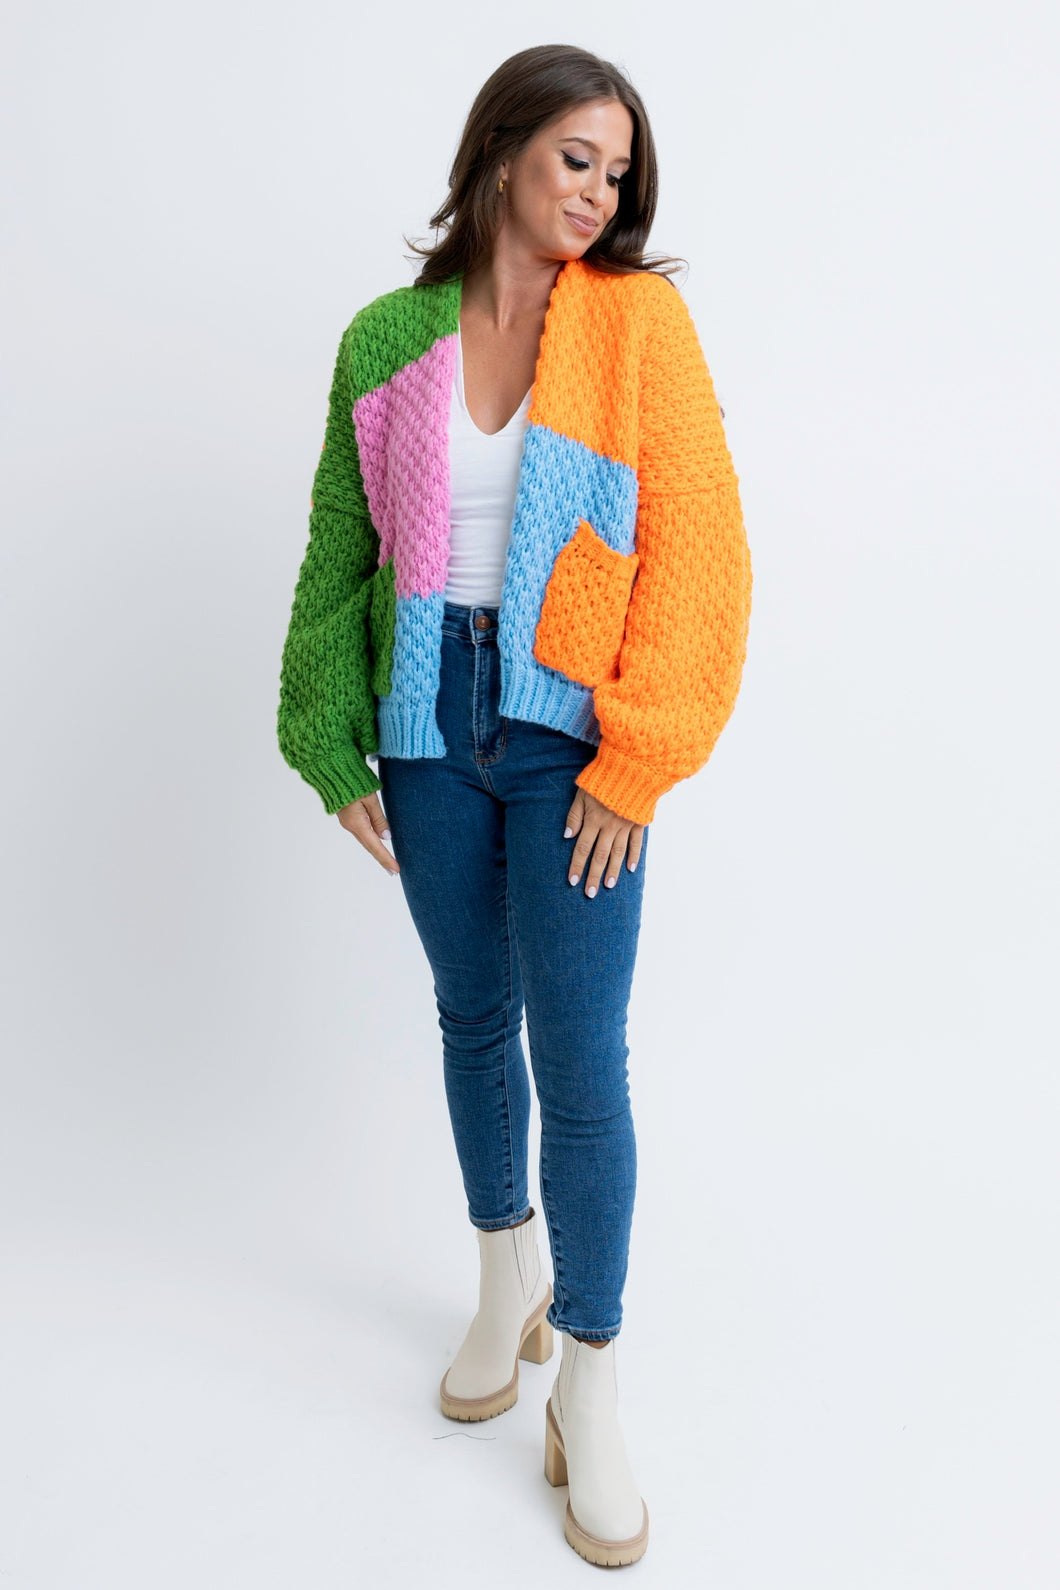 Karlie Crochet Cardigan